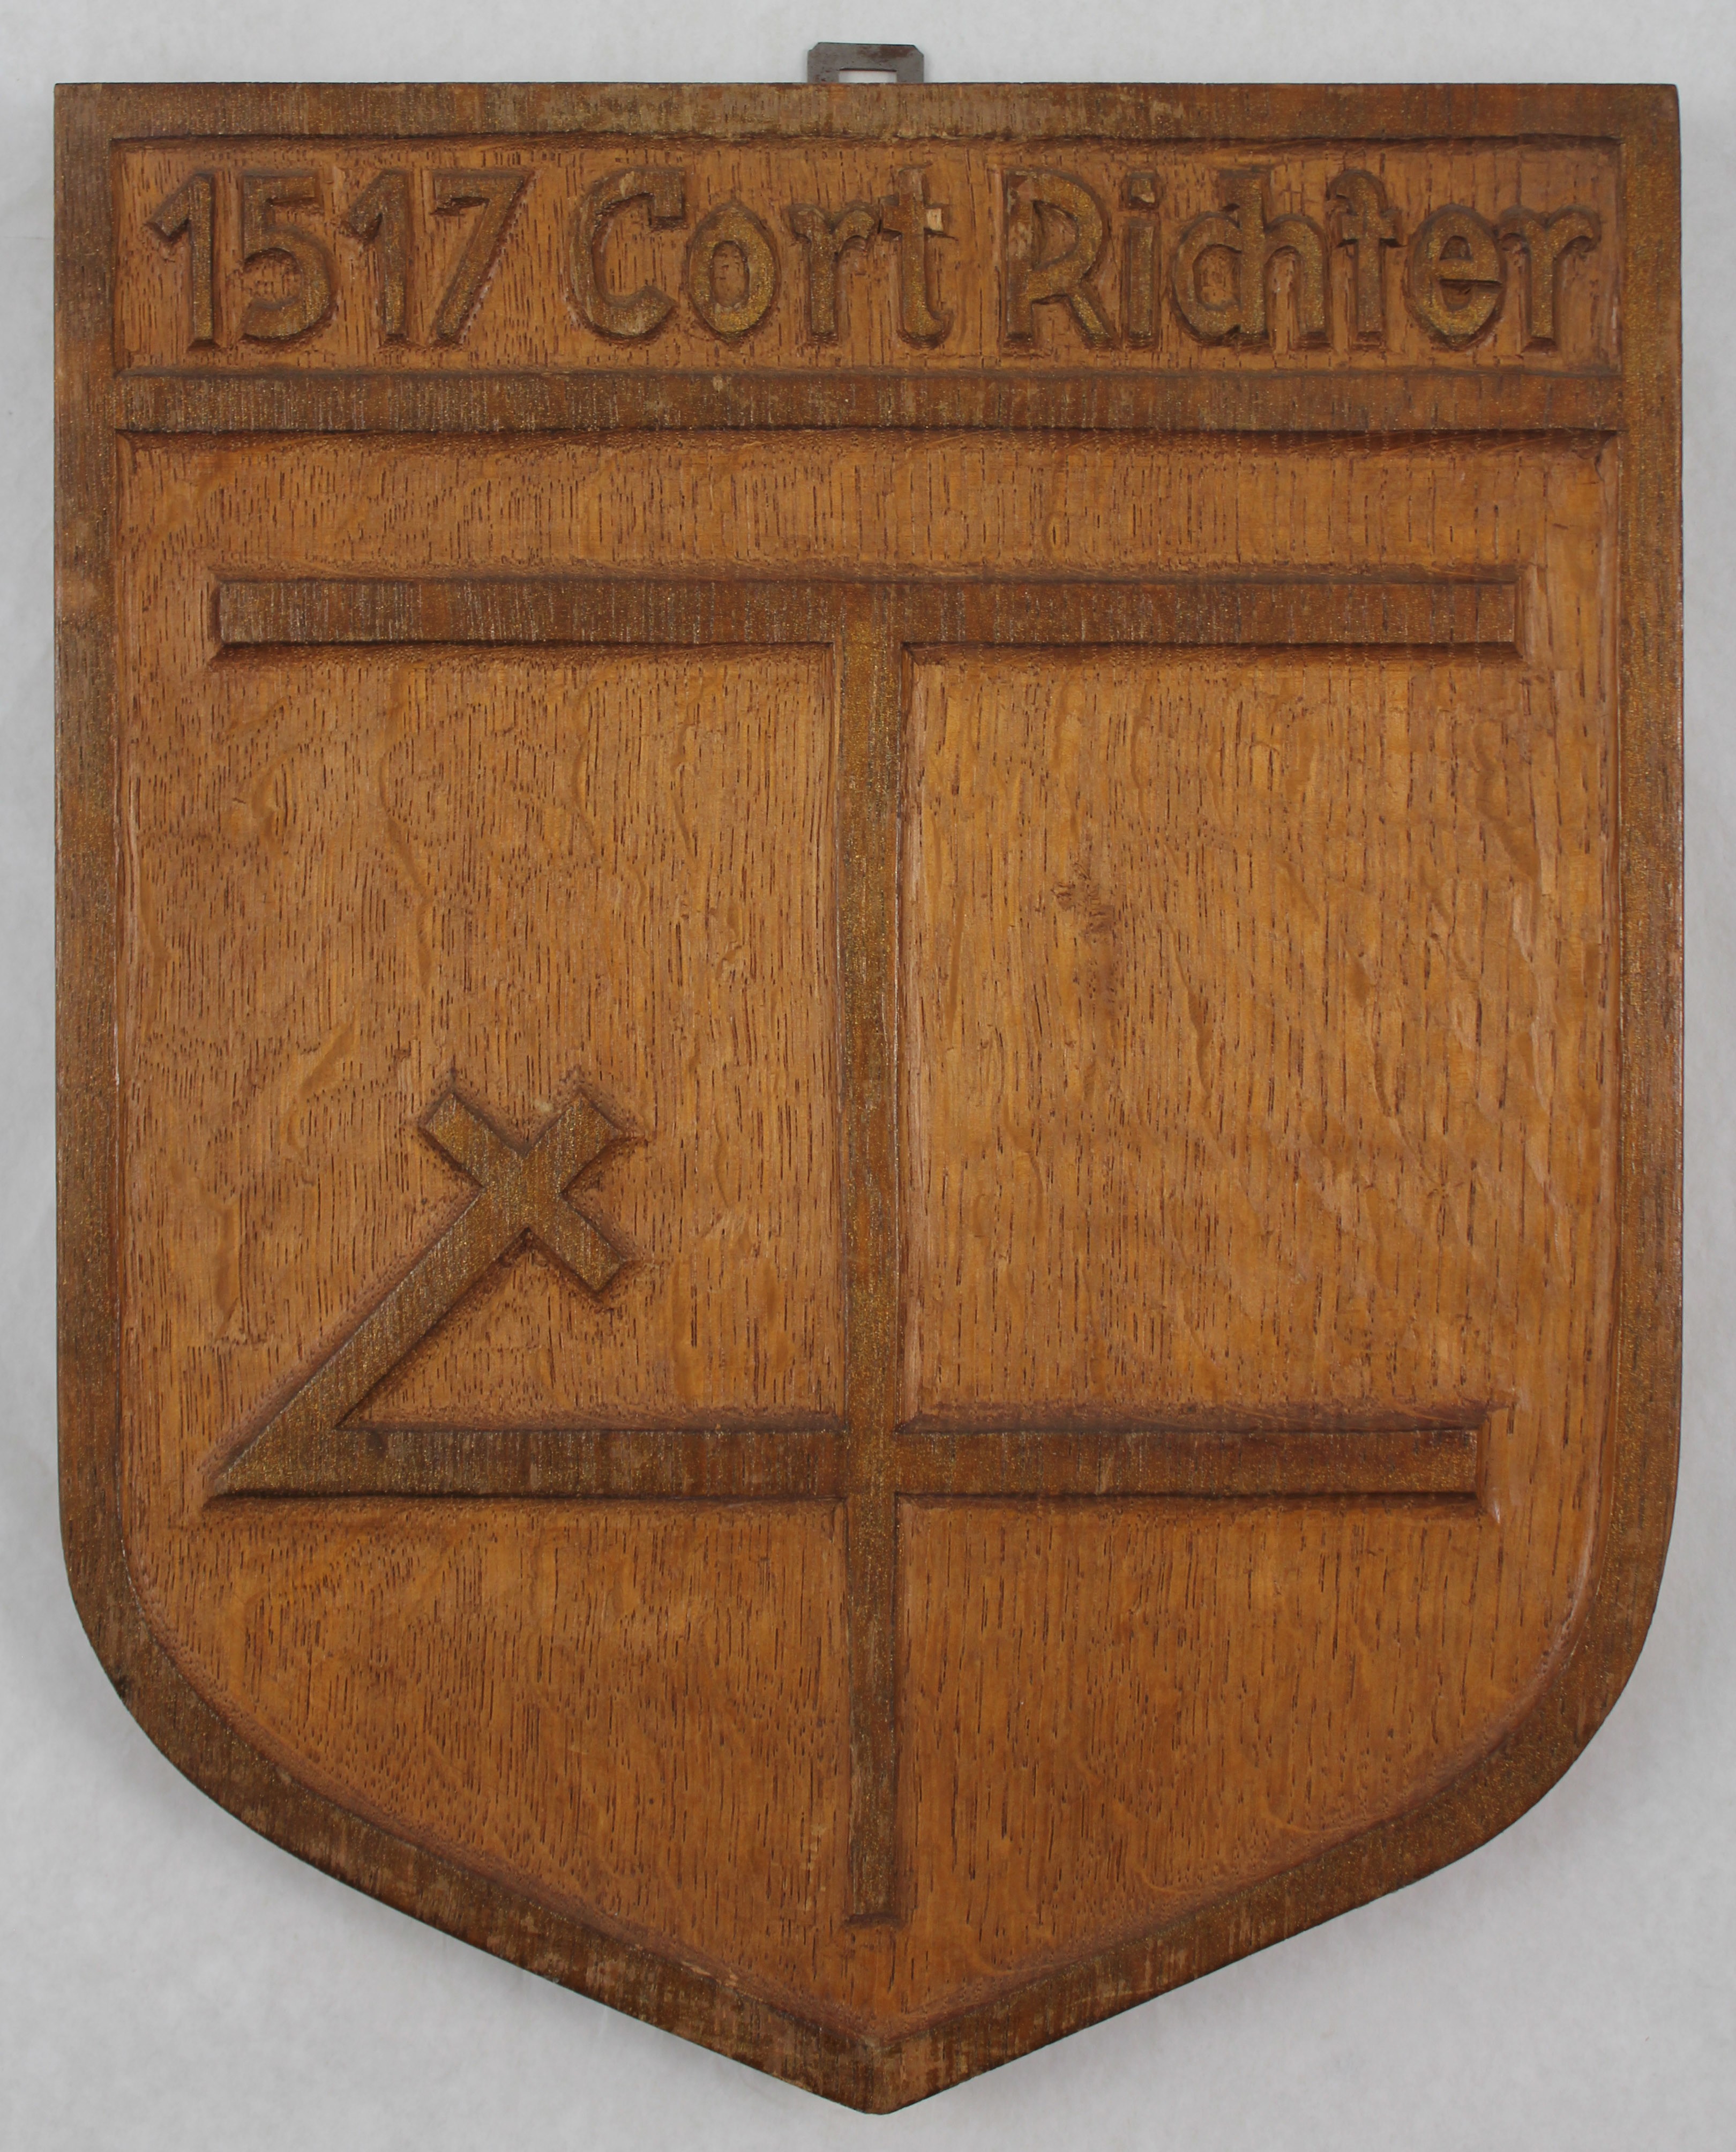 Wappenschild & Hölzernes Wappen mit Hausmarke, Cort Richter 1517 (Hellweg-Museum Unna CC BY-NC-SA)